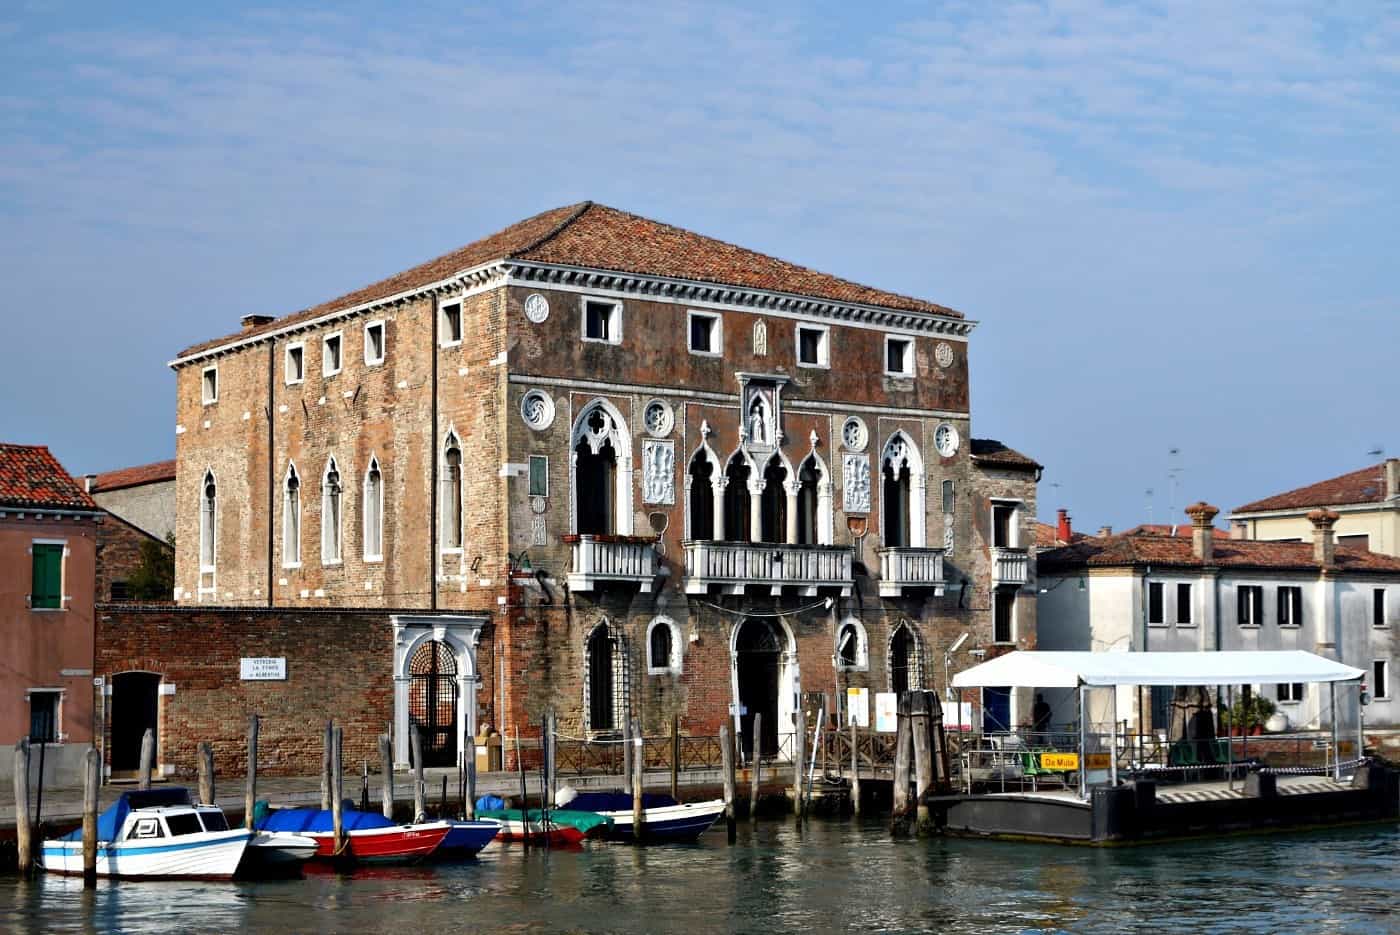 Palazzo da Mula facade opens onto a narrow walkway along the waterfront